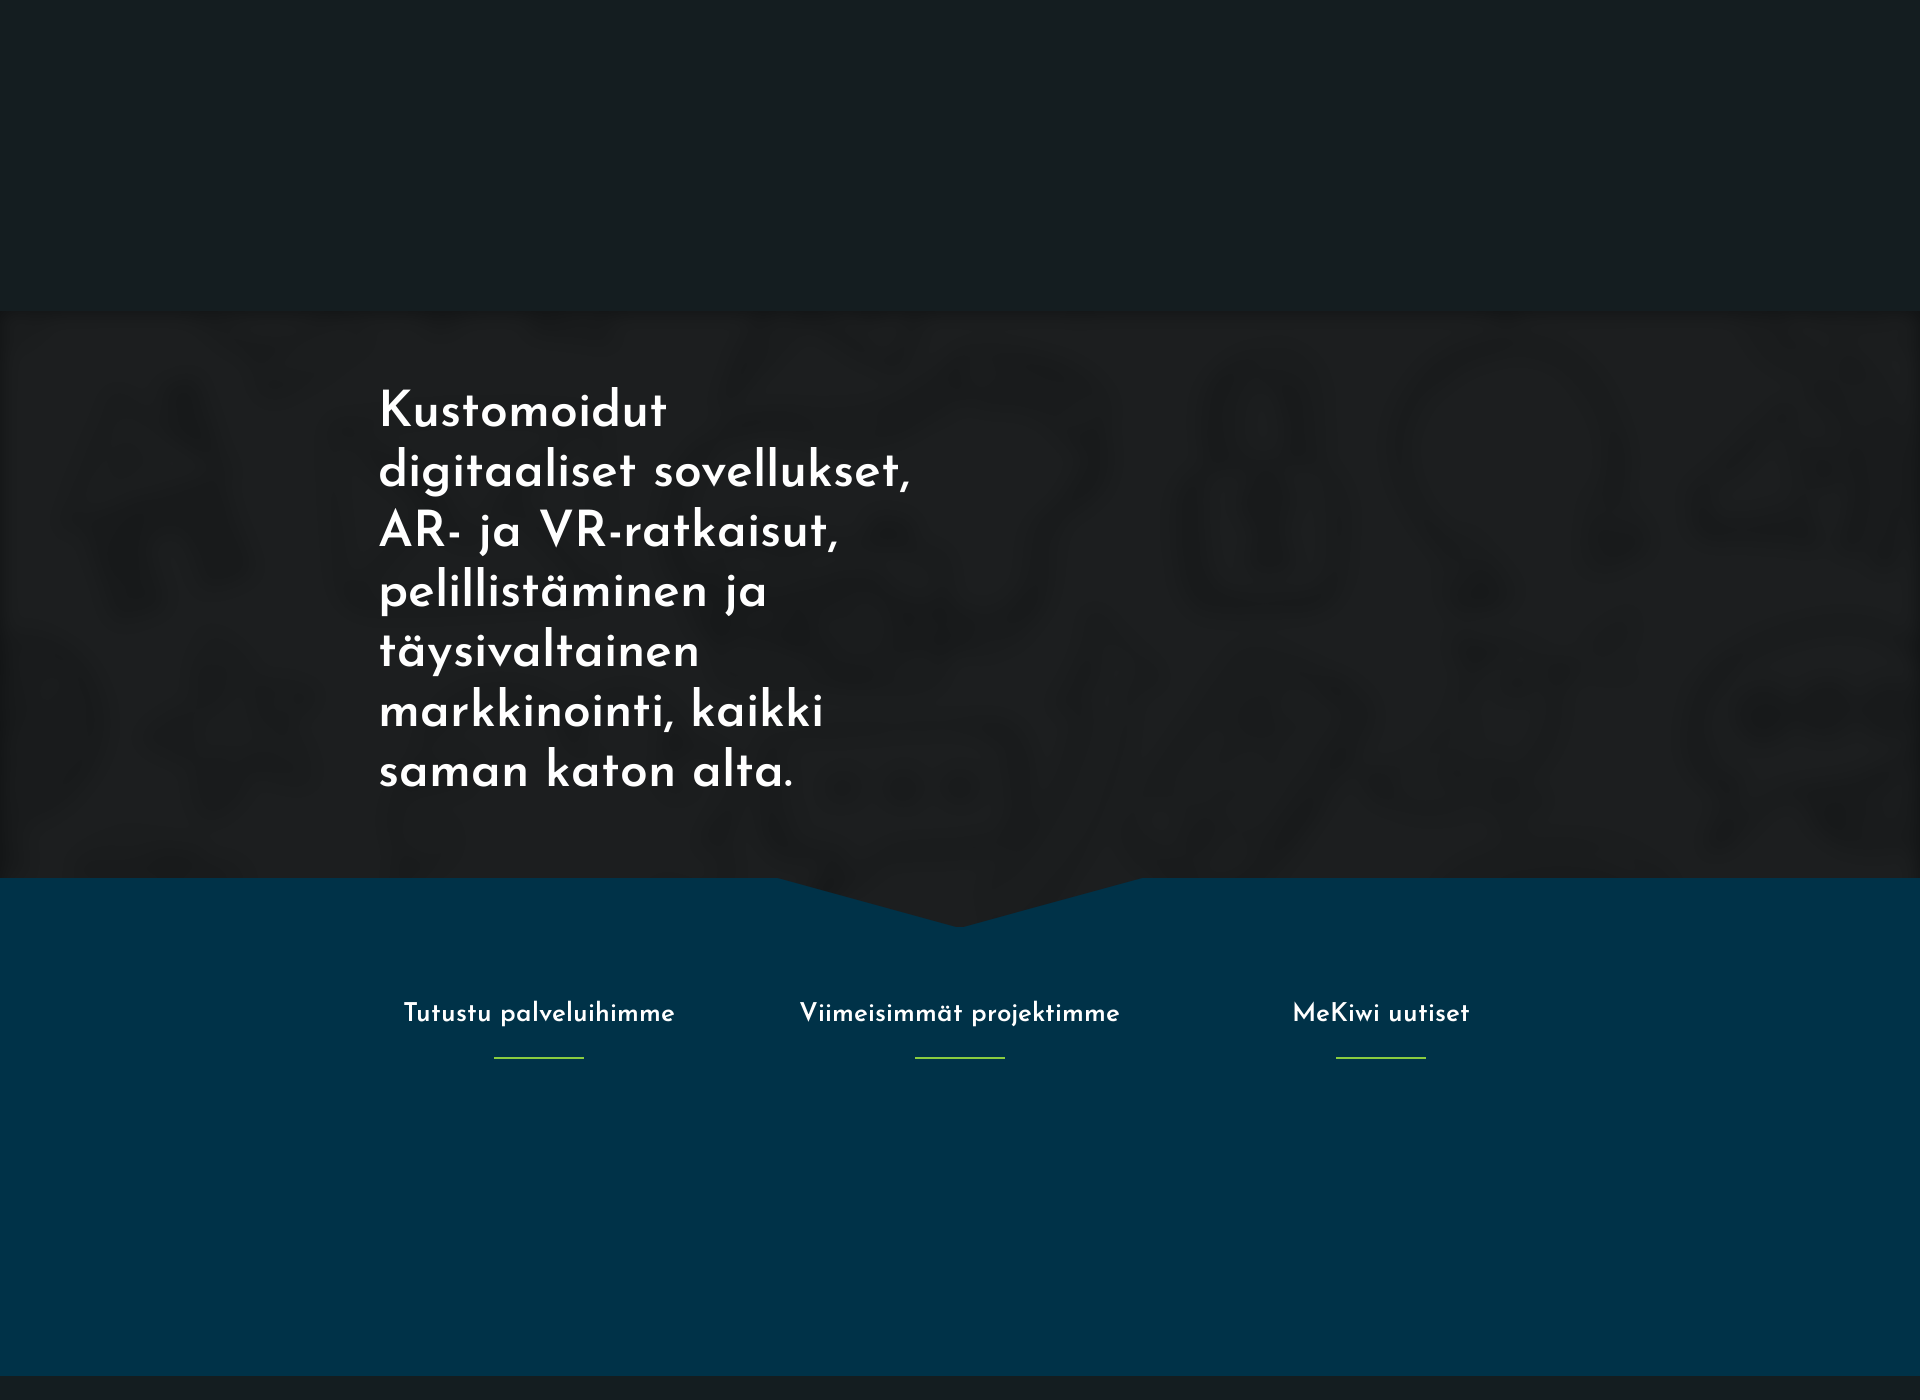 Skärmdump för mekiwi.fi